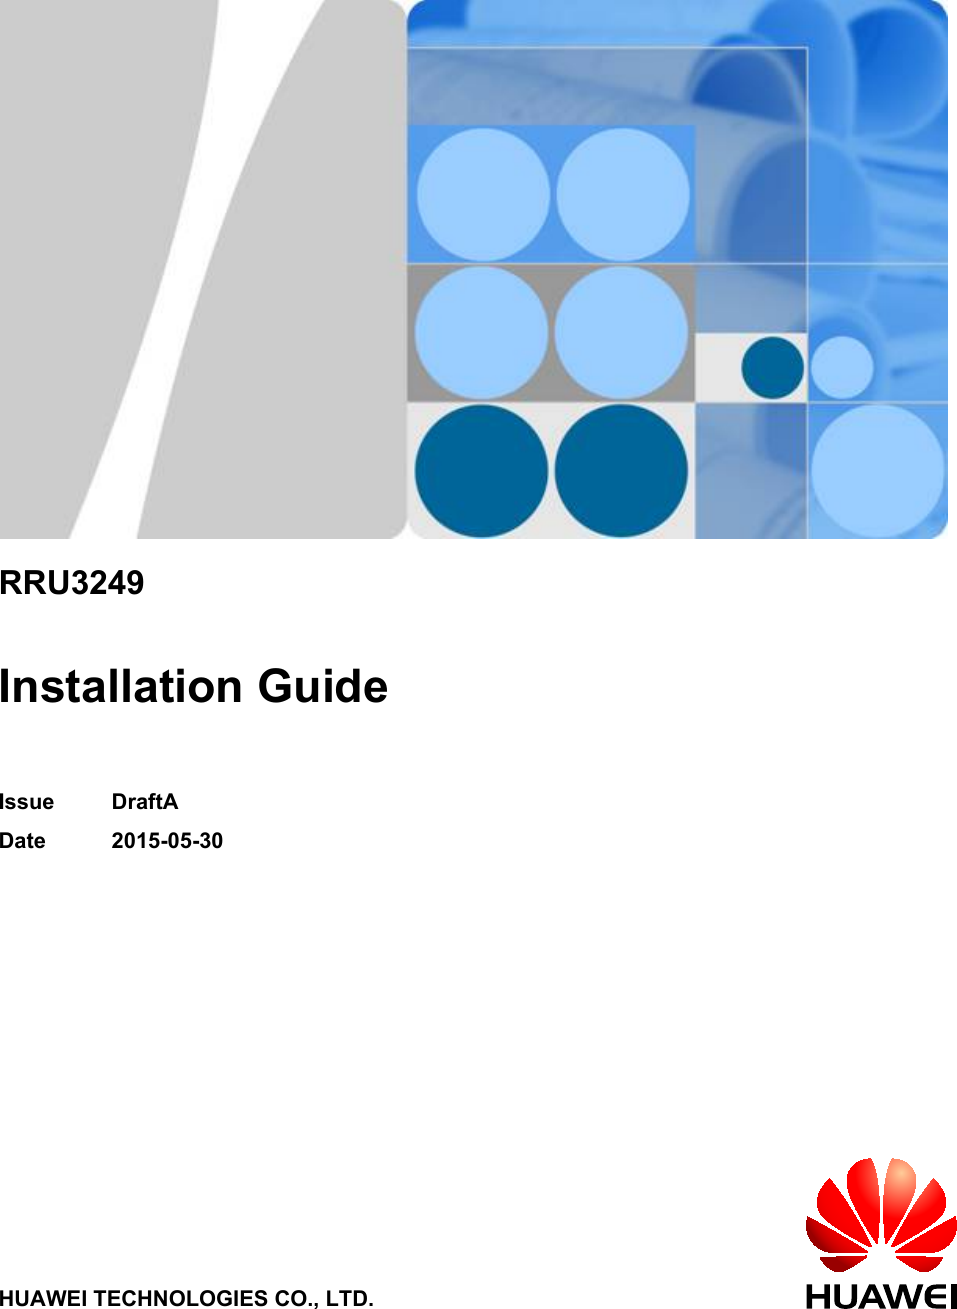 RRU3249Installation GuideIssue DraftADate 2015-05-30HUAWEI TECHNOLOGIES CO., LTD.